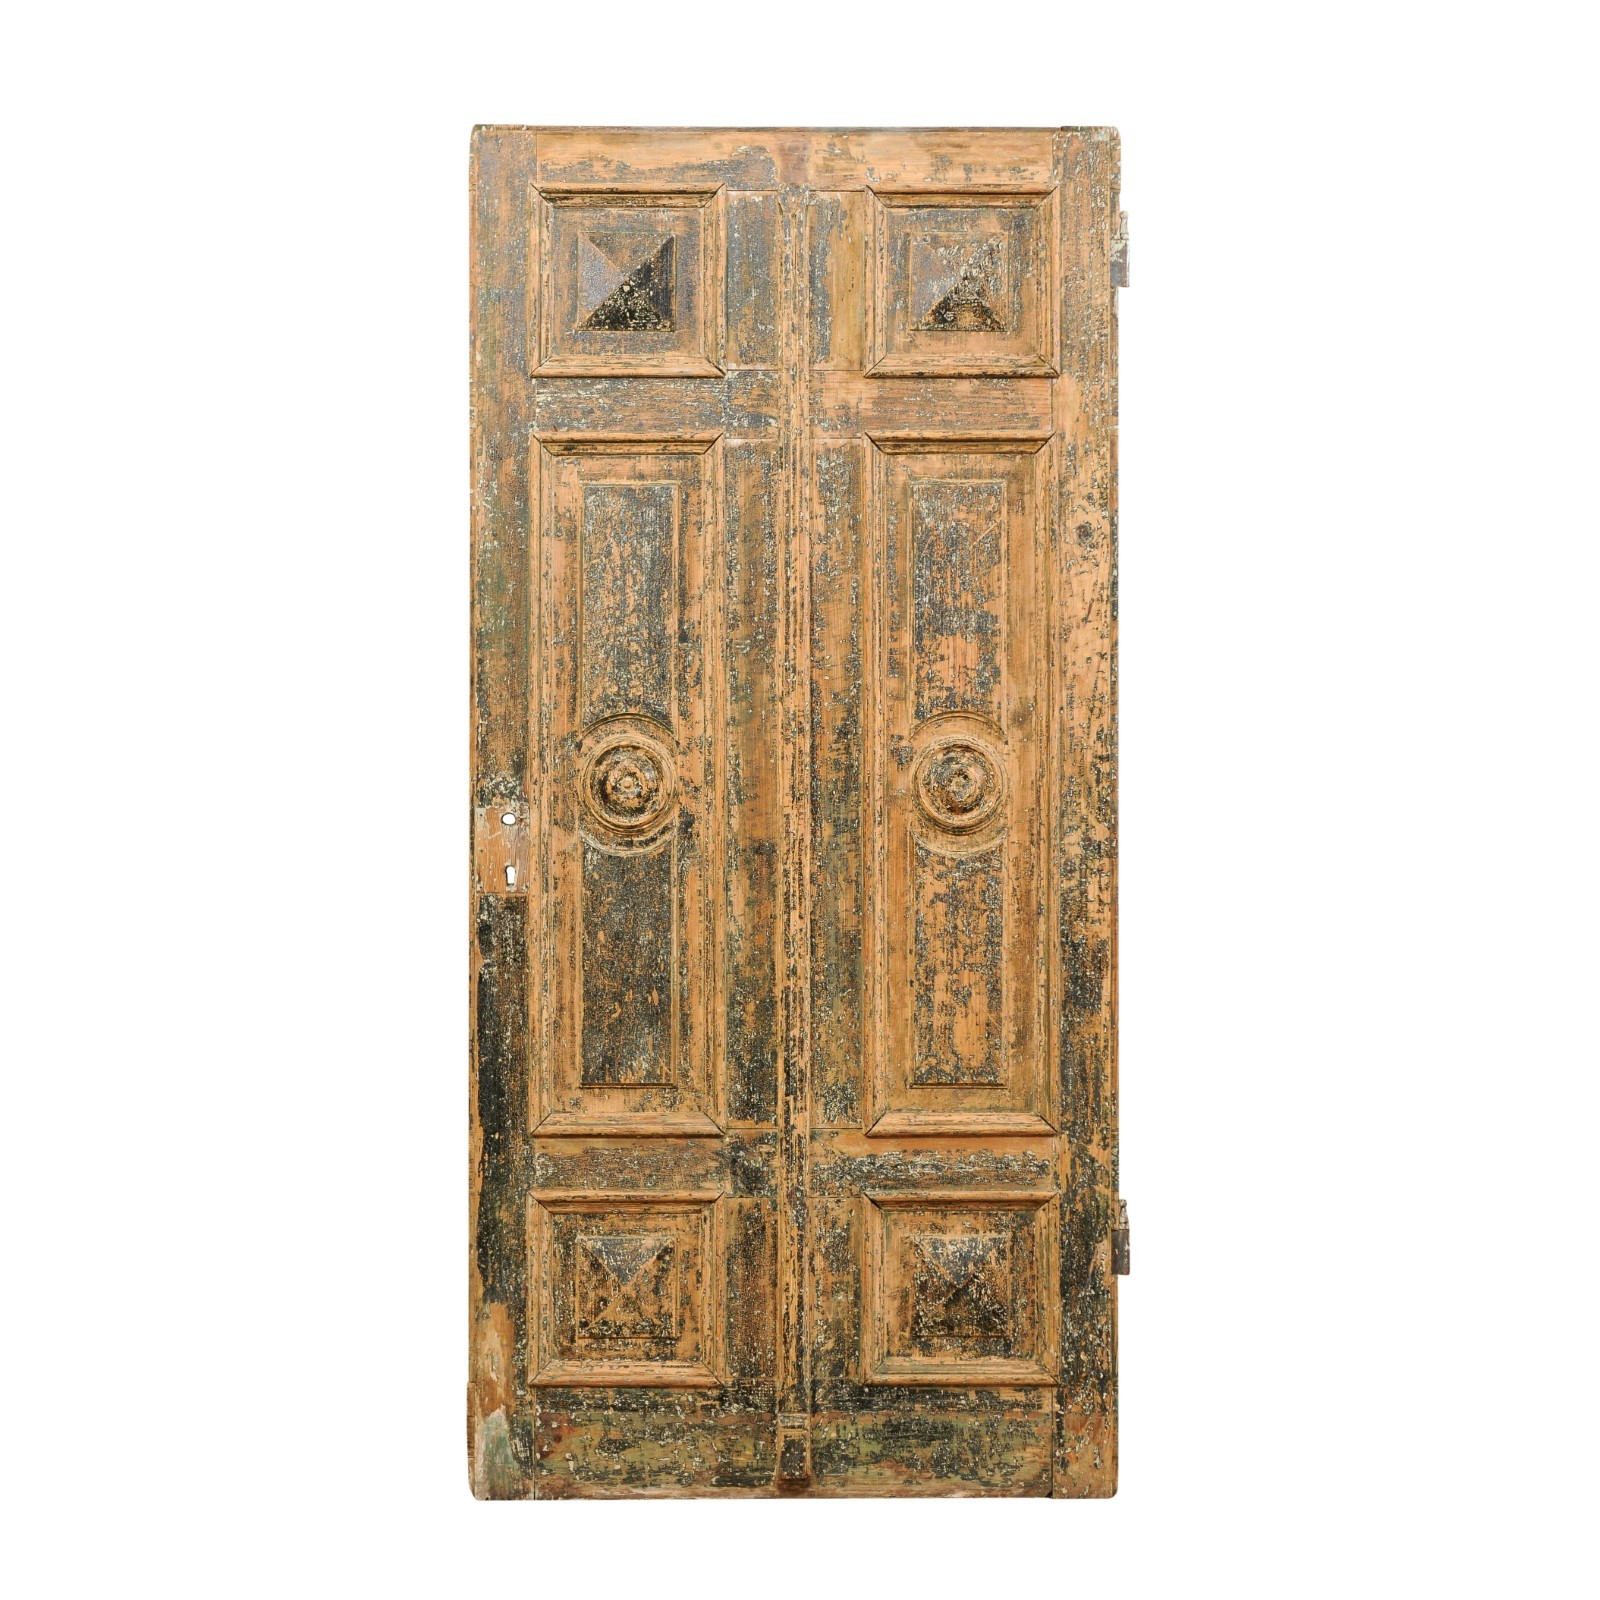 A Spanish Raised-Panel Door, Early 19th C.